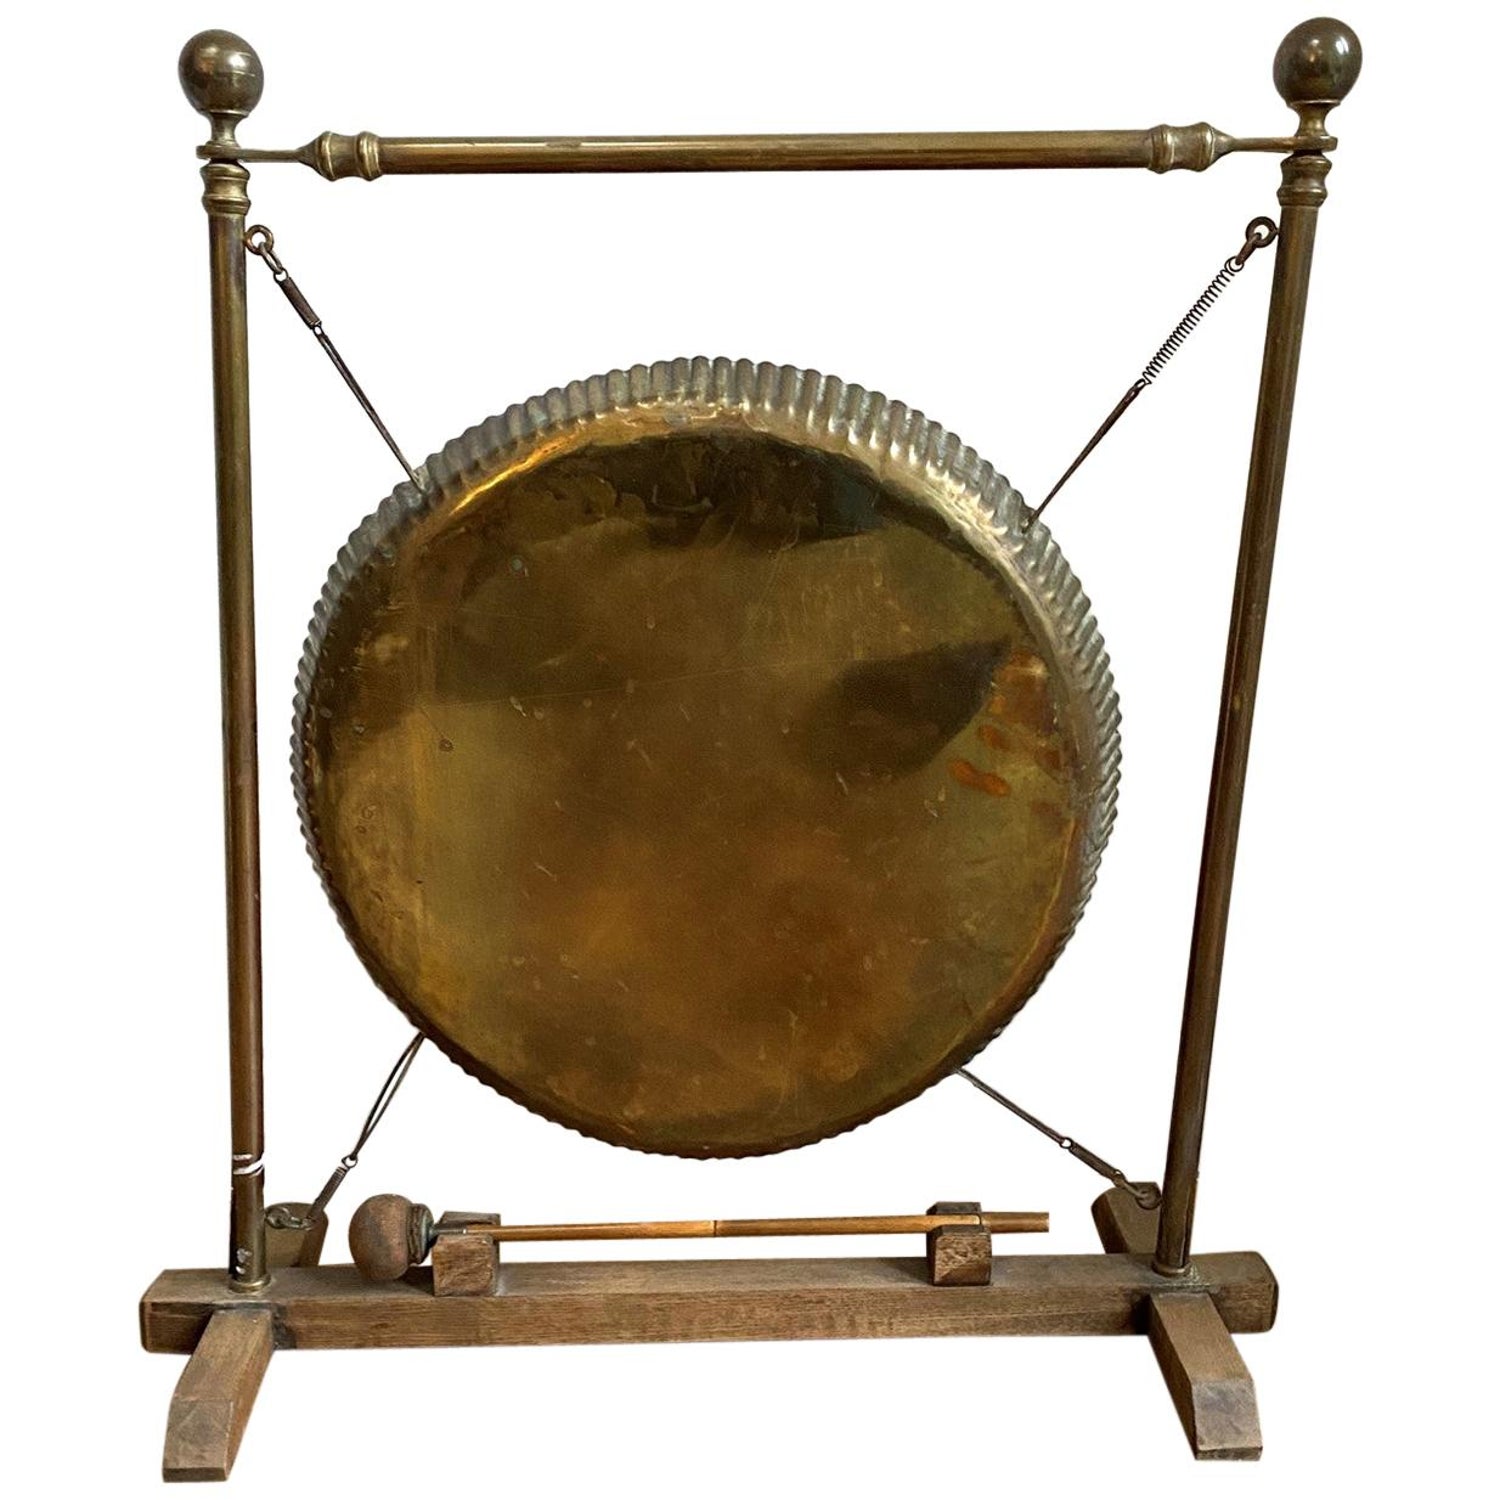 Antique Brass Dinner Gong - 5 For Sale on 1stDibs